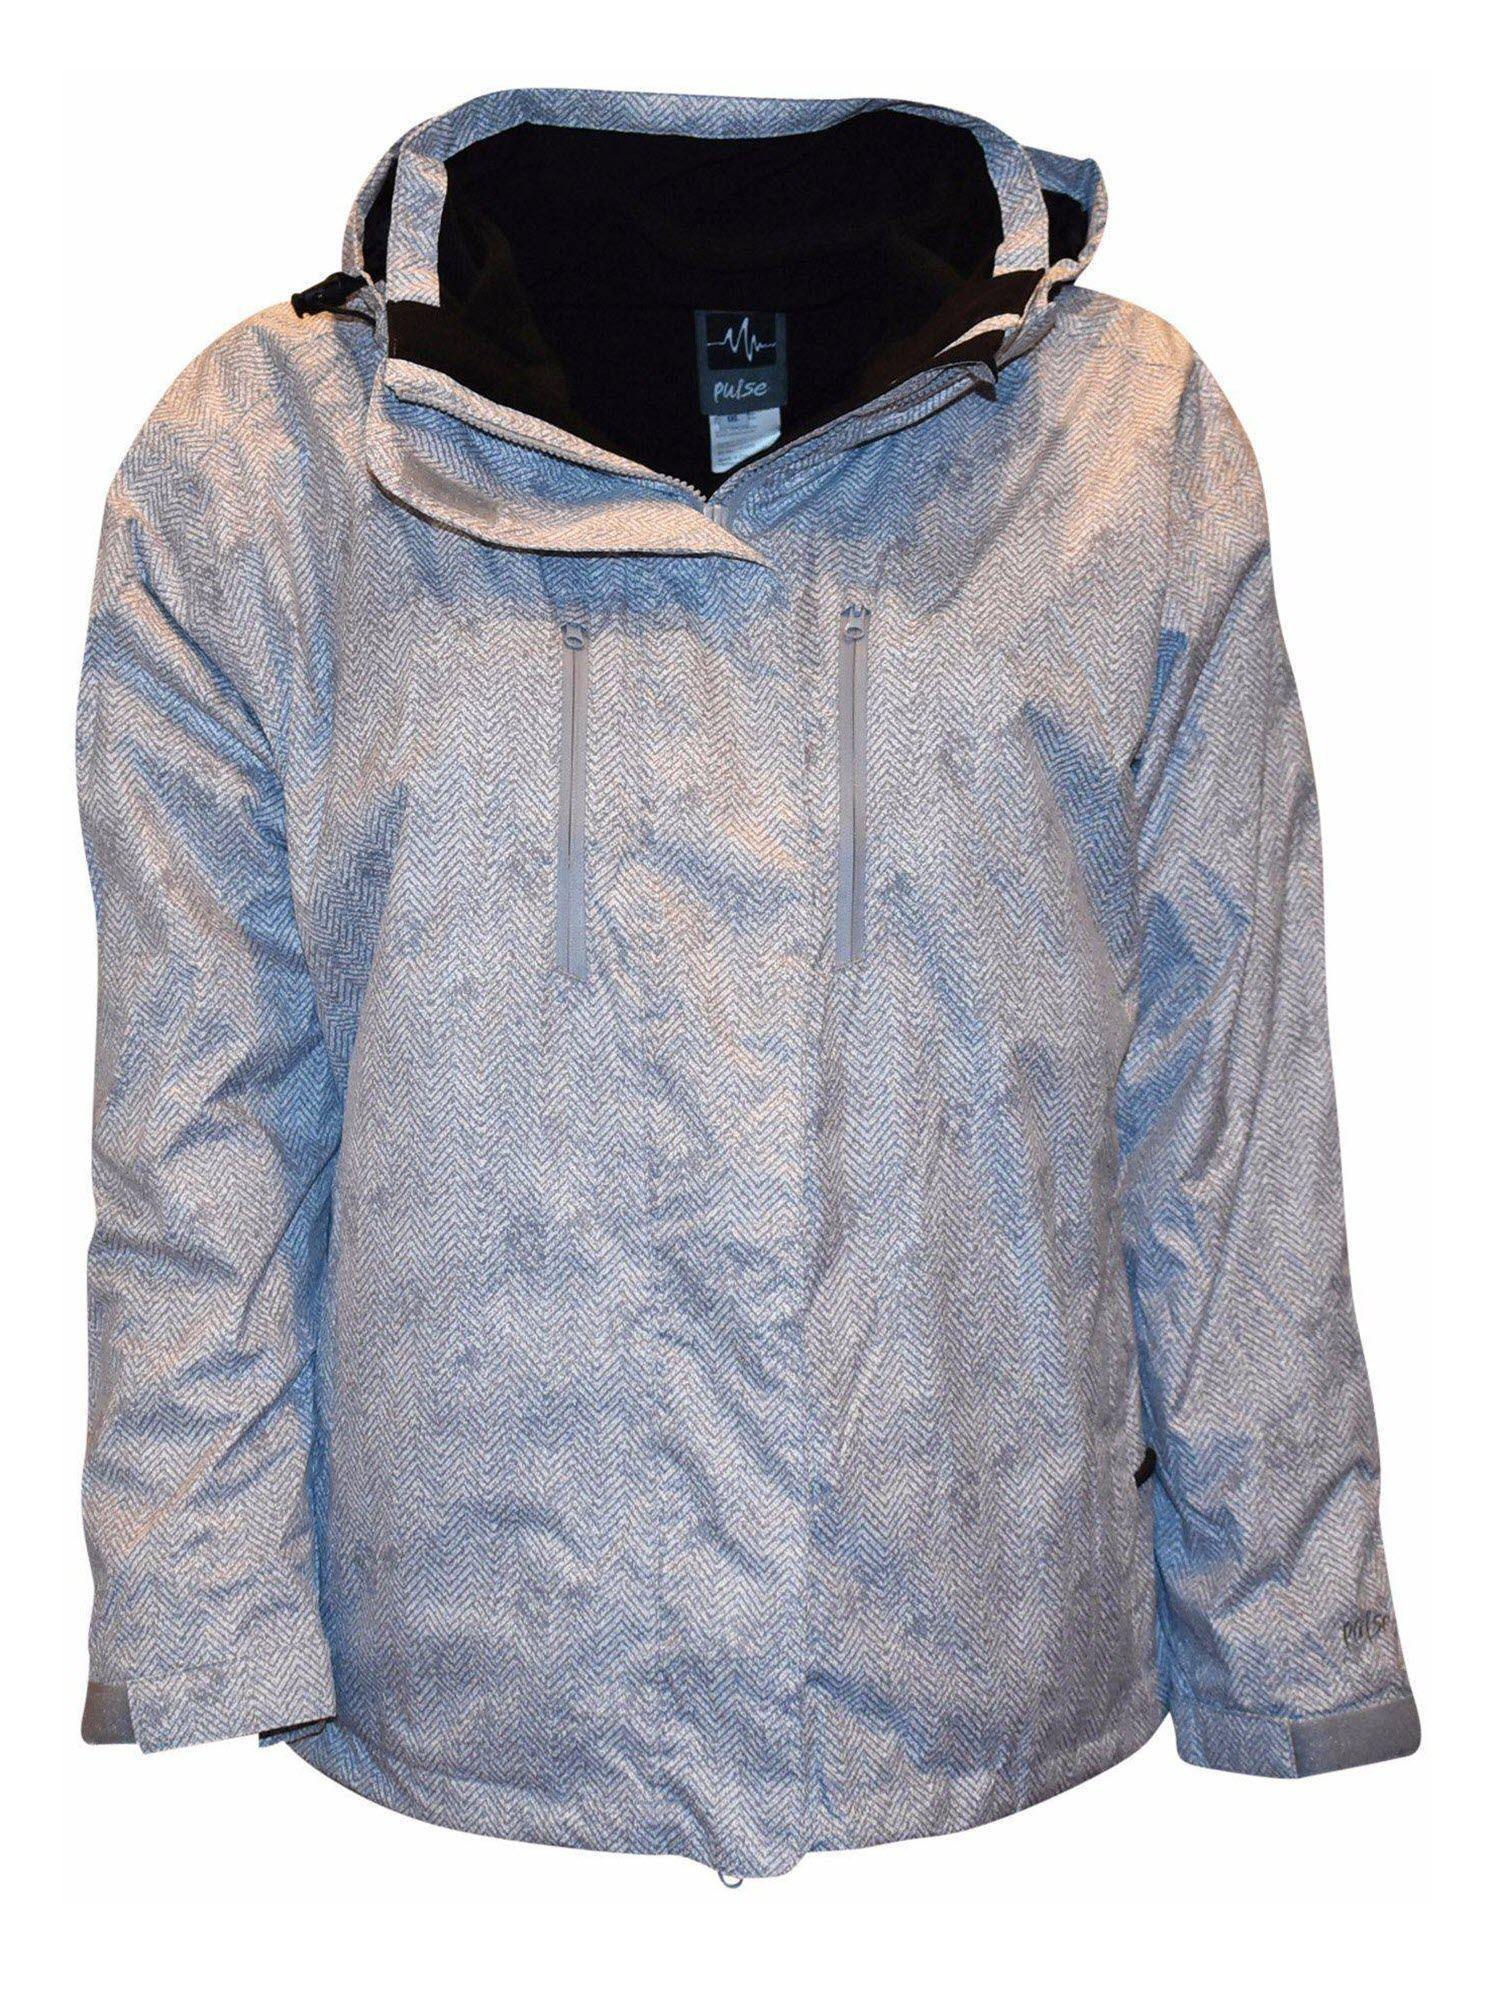 Pulse Women's Plus Extended Size 3in1 Zig Zag Boundary Snow Ski Jacket Coat 1X - 6X - image 1 of 1